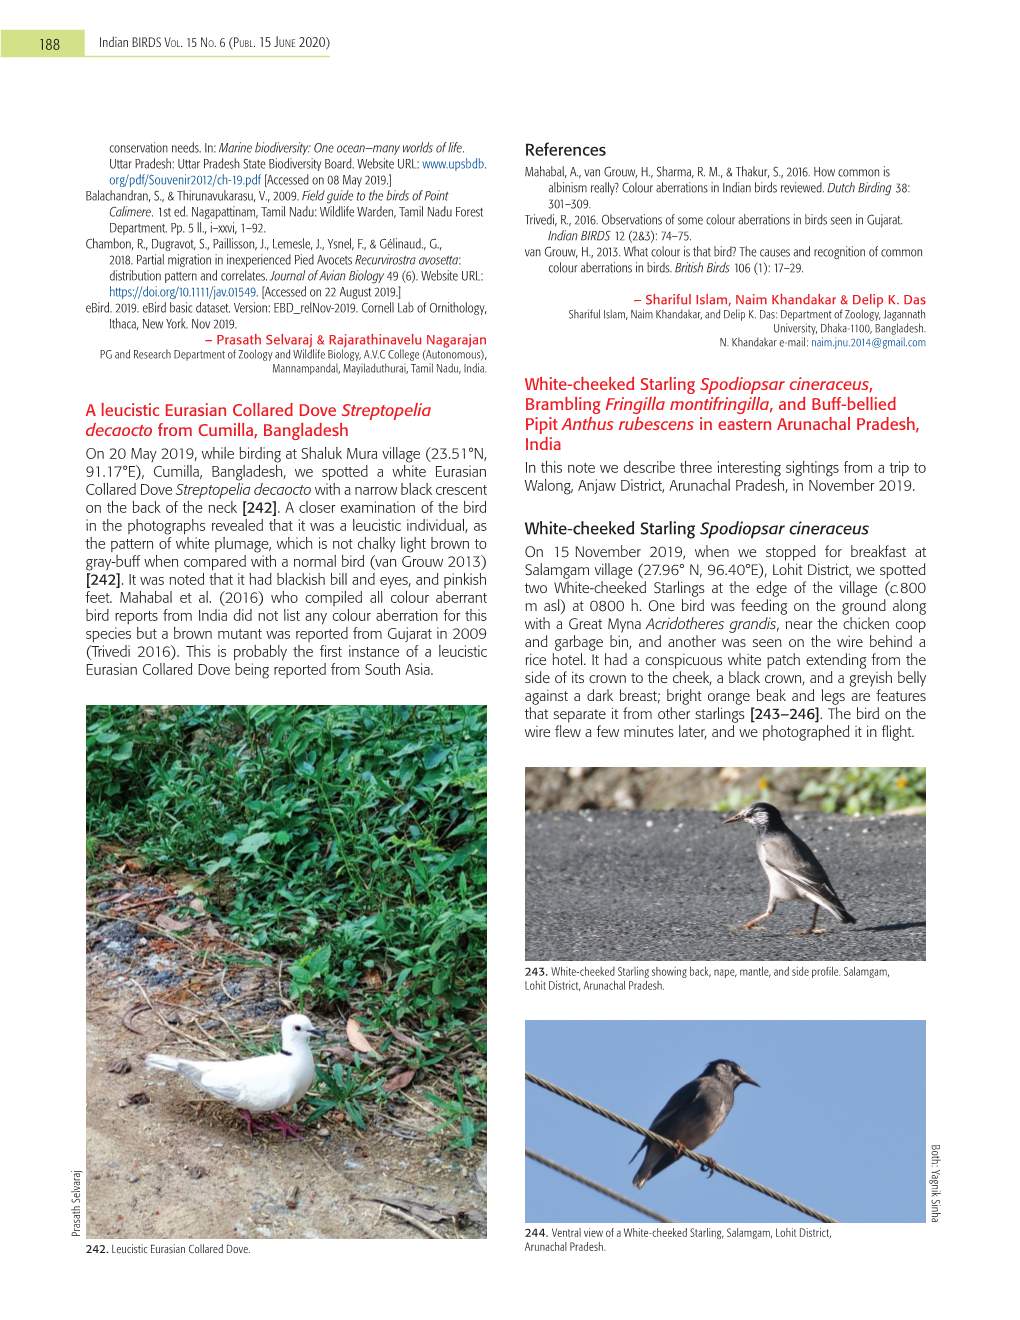 188 a Leucistic Eurasian Collared Dove Streptopelia Decaocto From